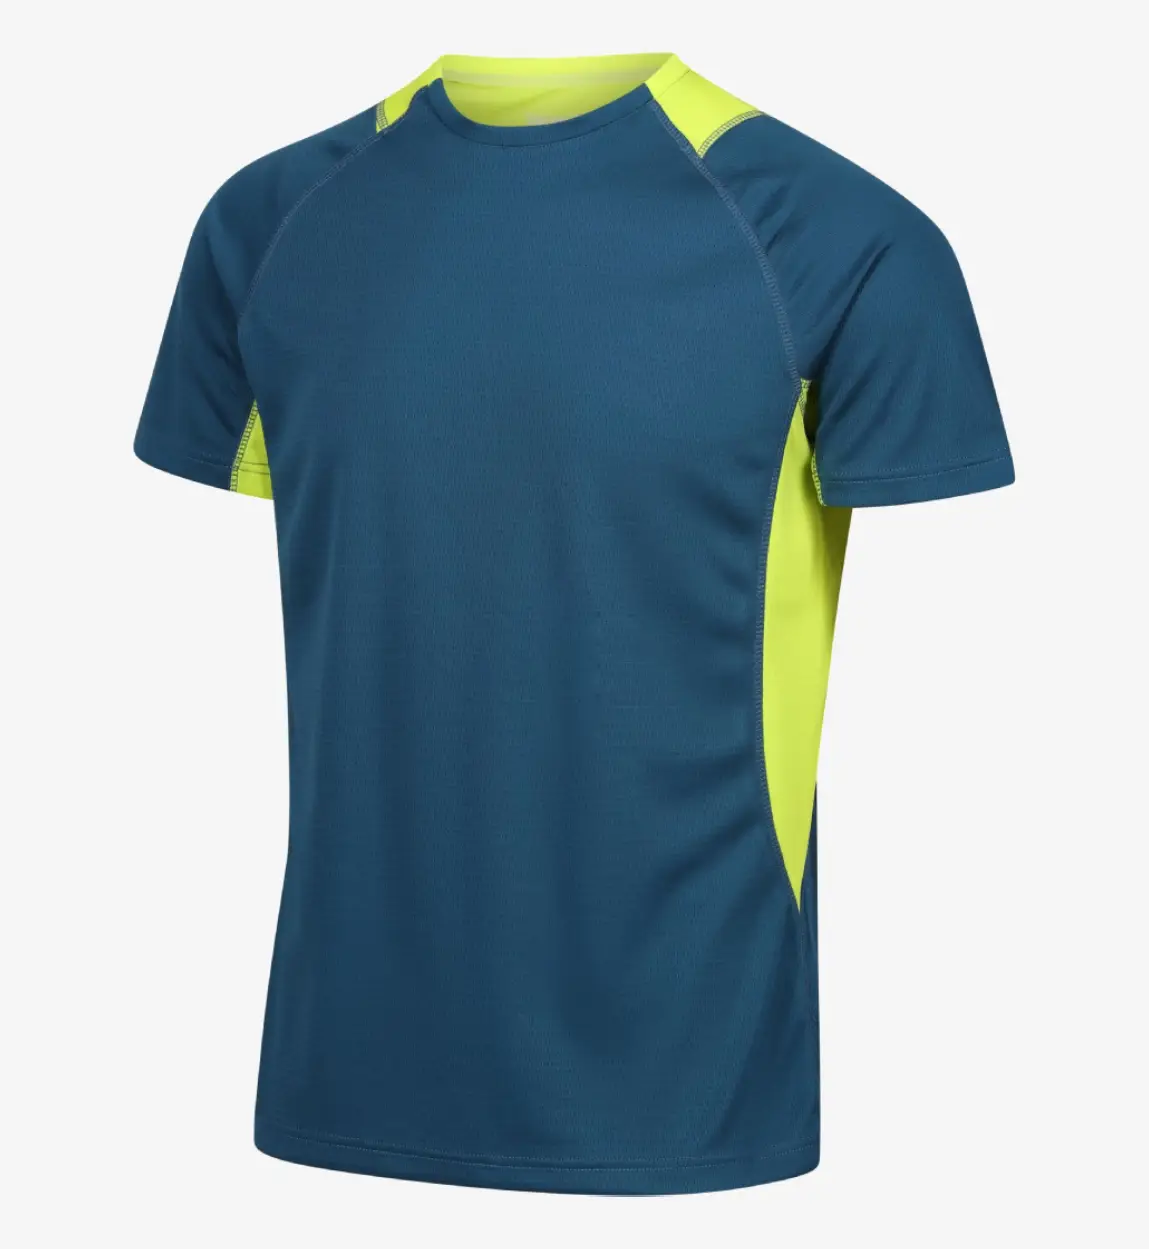 Tendon Sports T-Shirt (2)